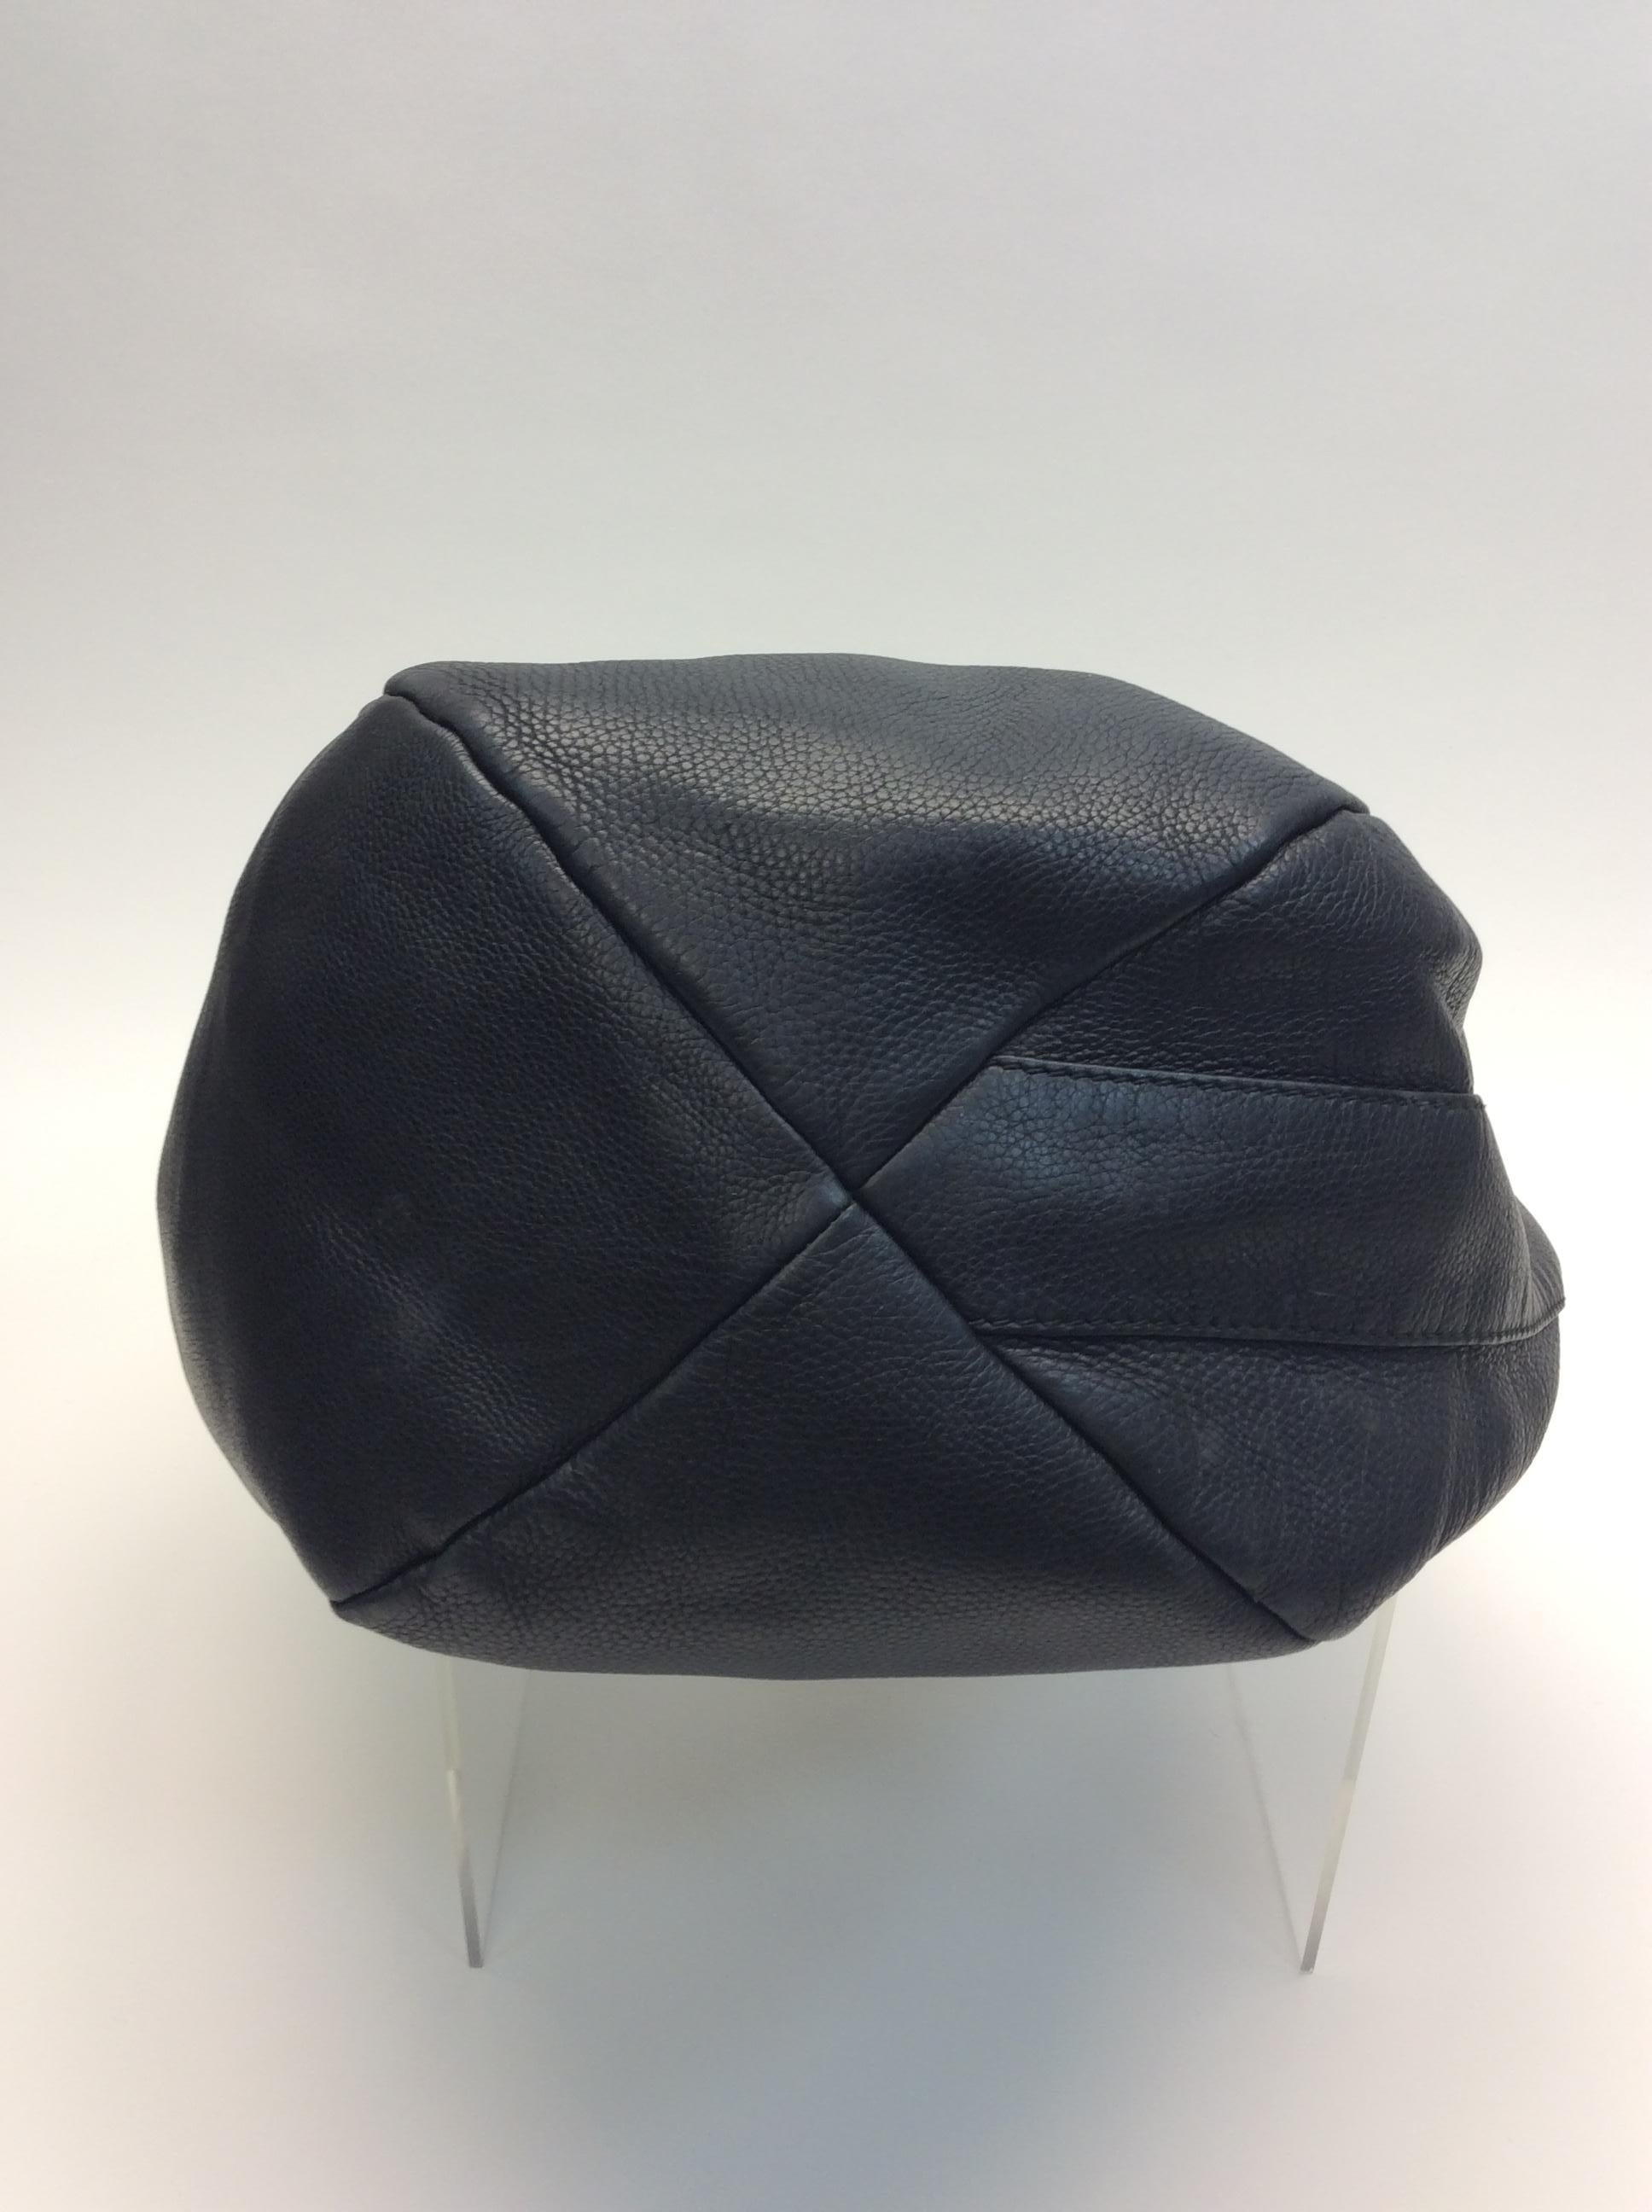 Gucci Black Leather Shoulder Bag with Horsebit Detail For Sale 1